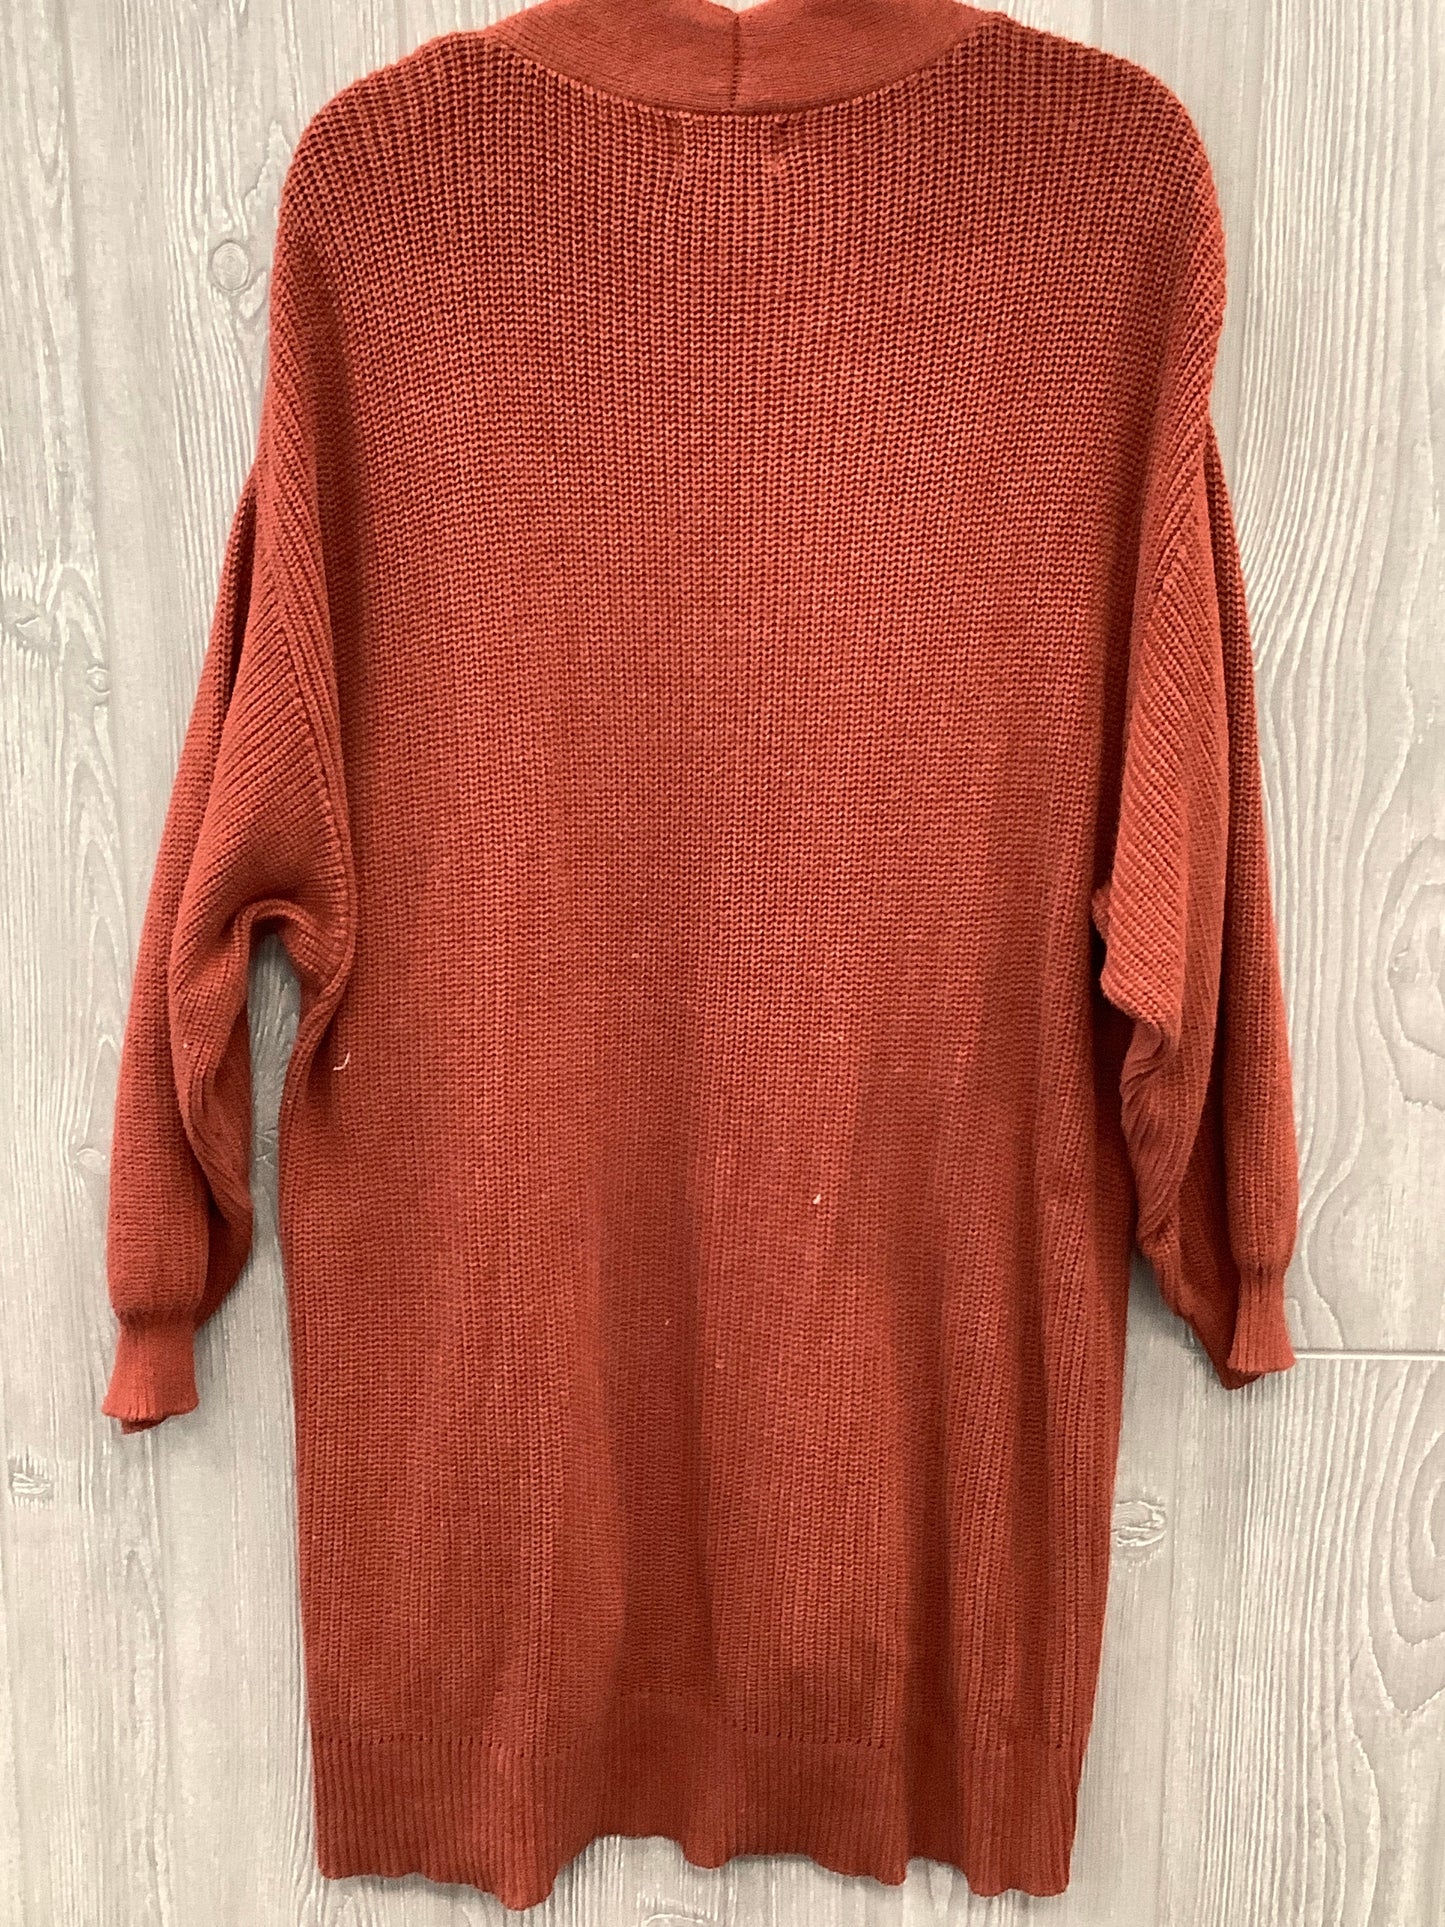 Sweater Cardigan By Universal Thread  Size: Xxl